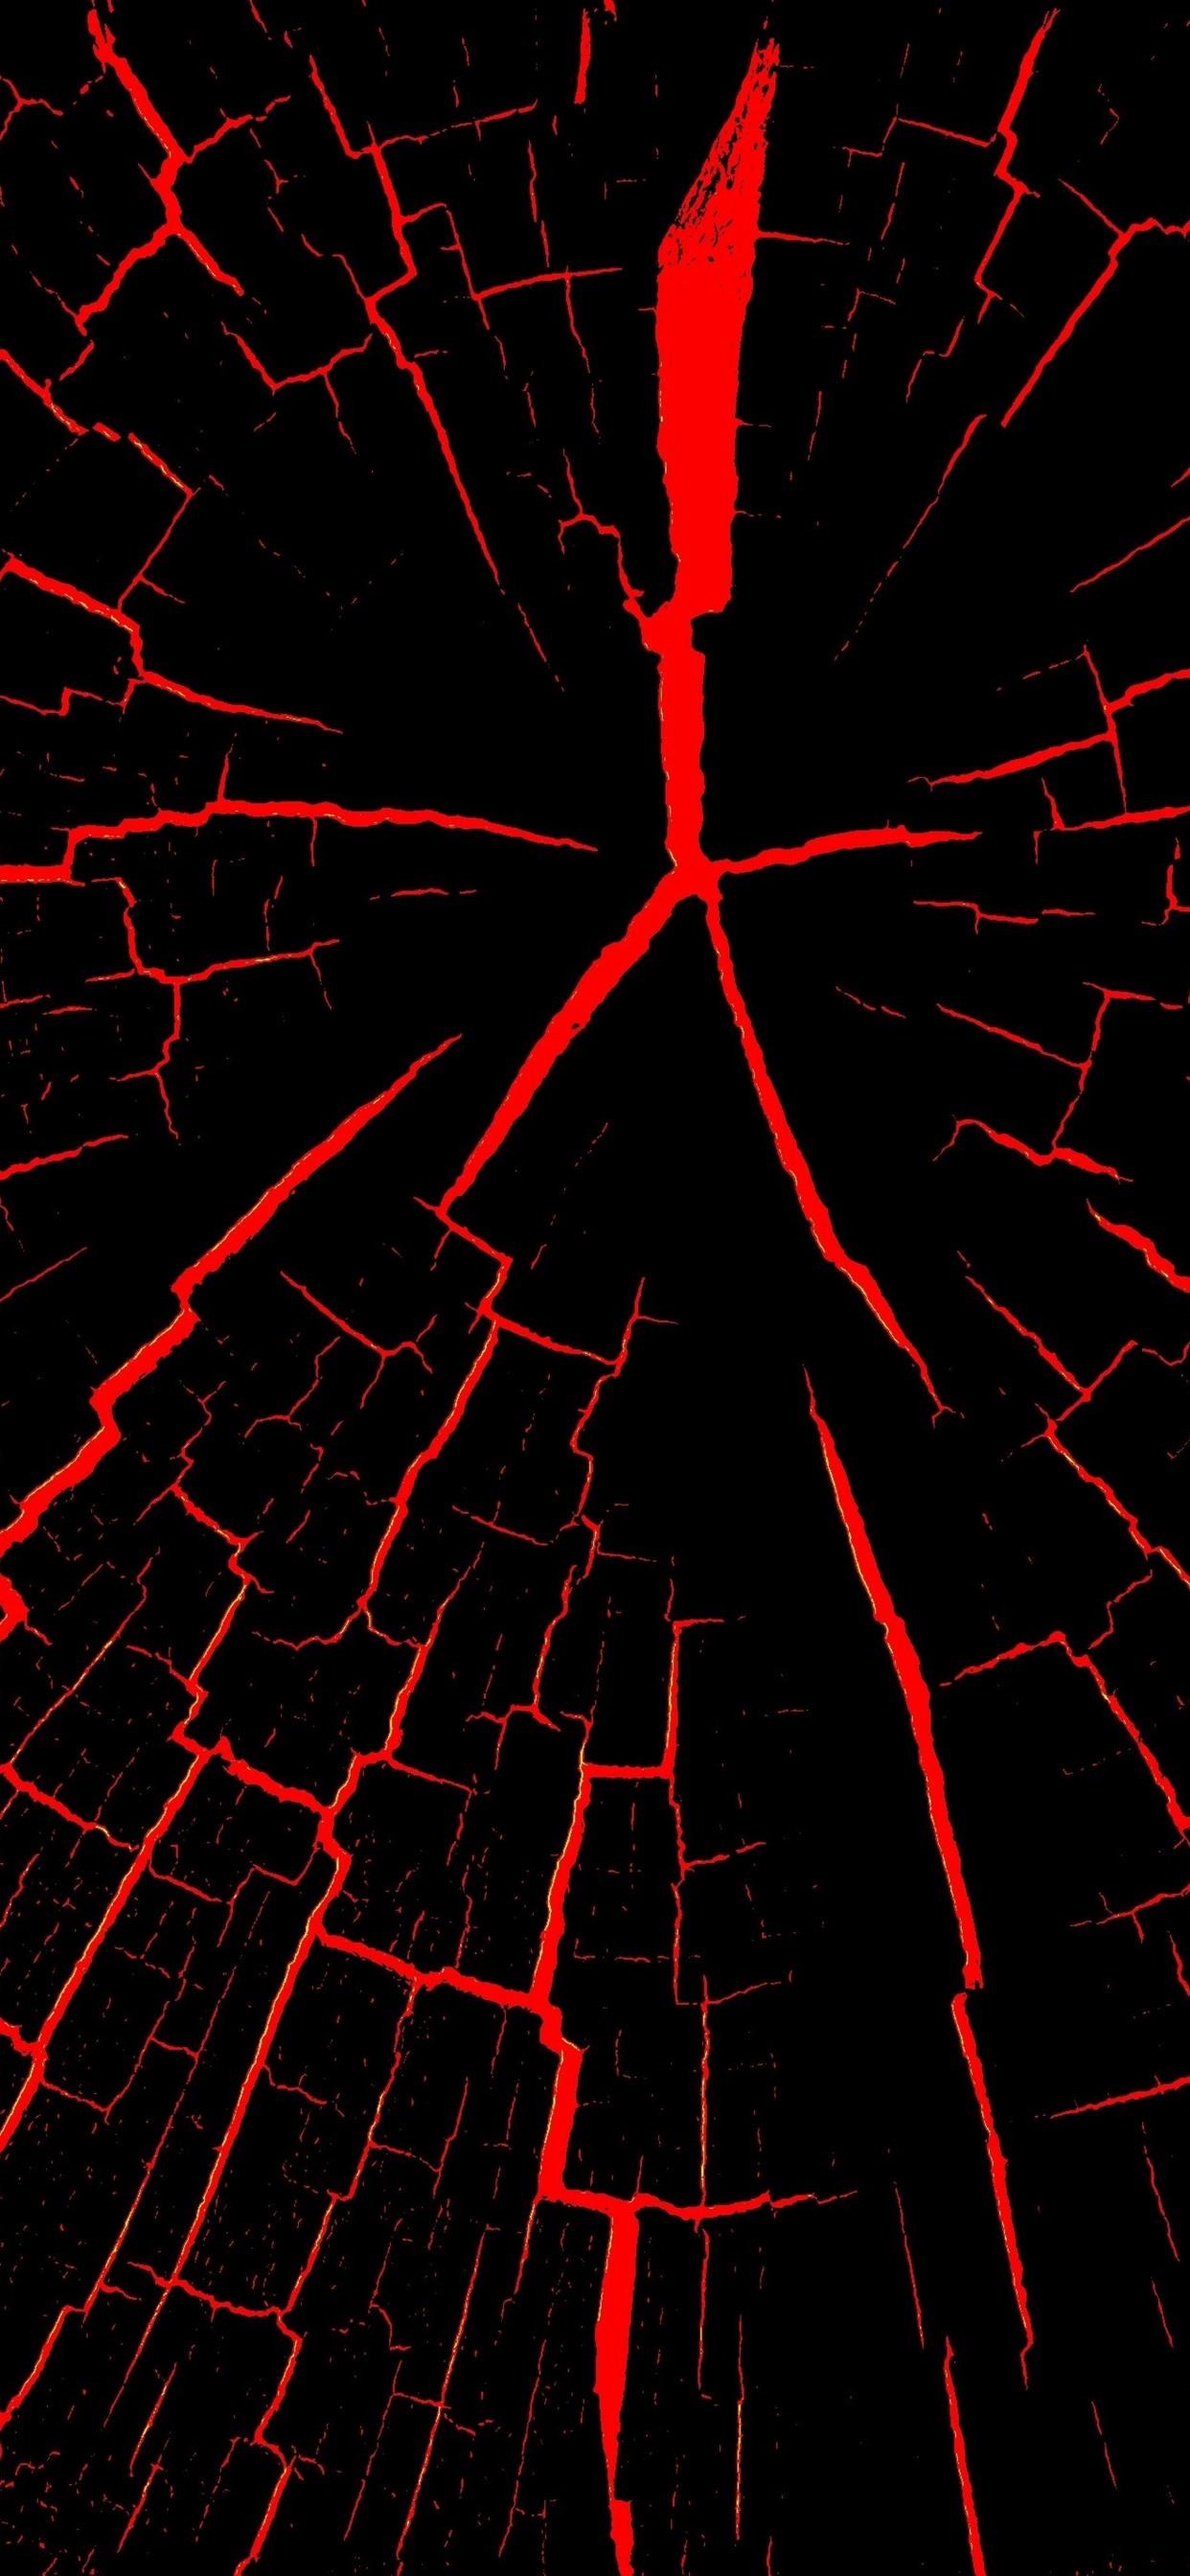 Black And Red iPhone Xs Max Wallpaperwalpaperlist.com